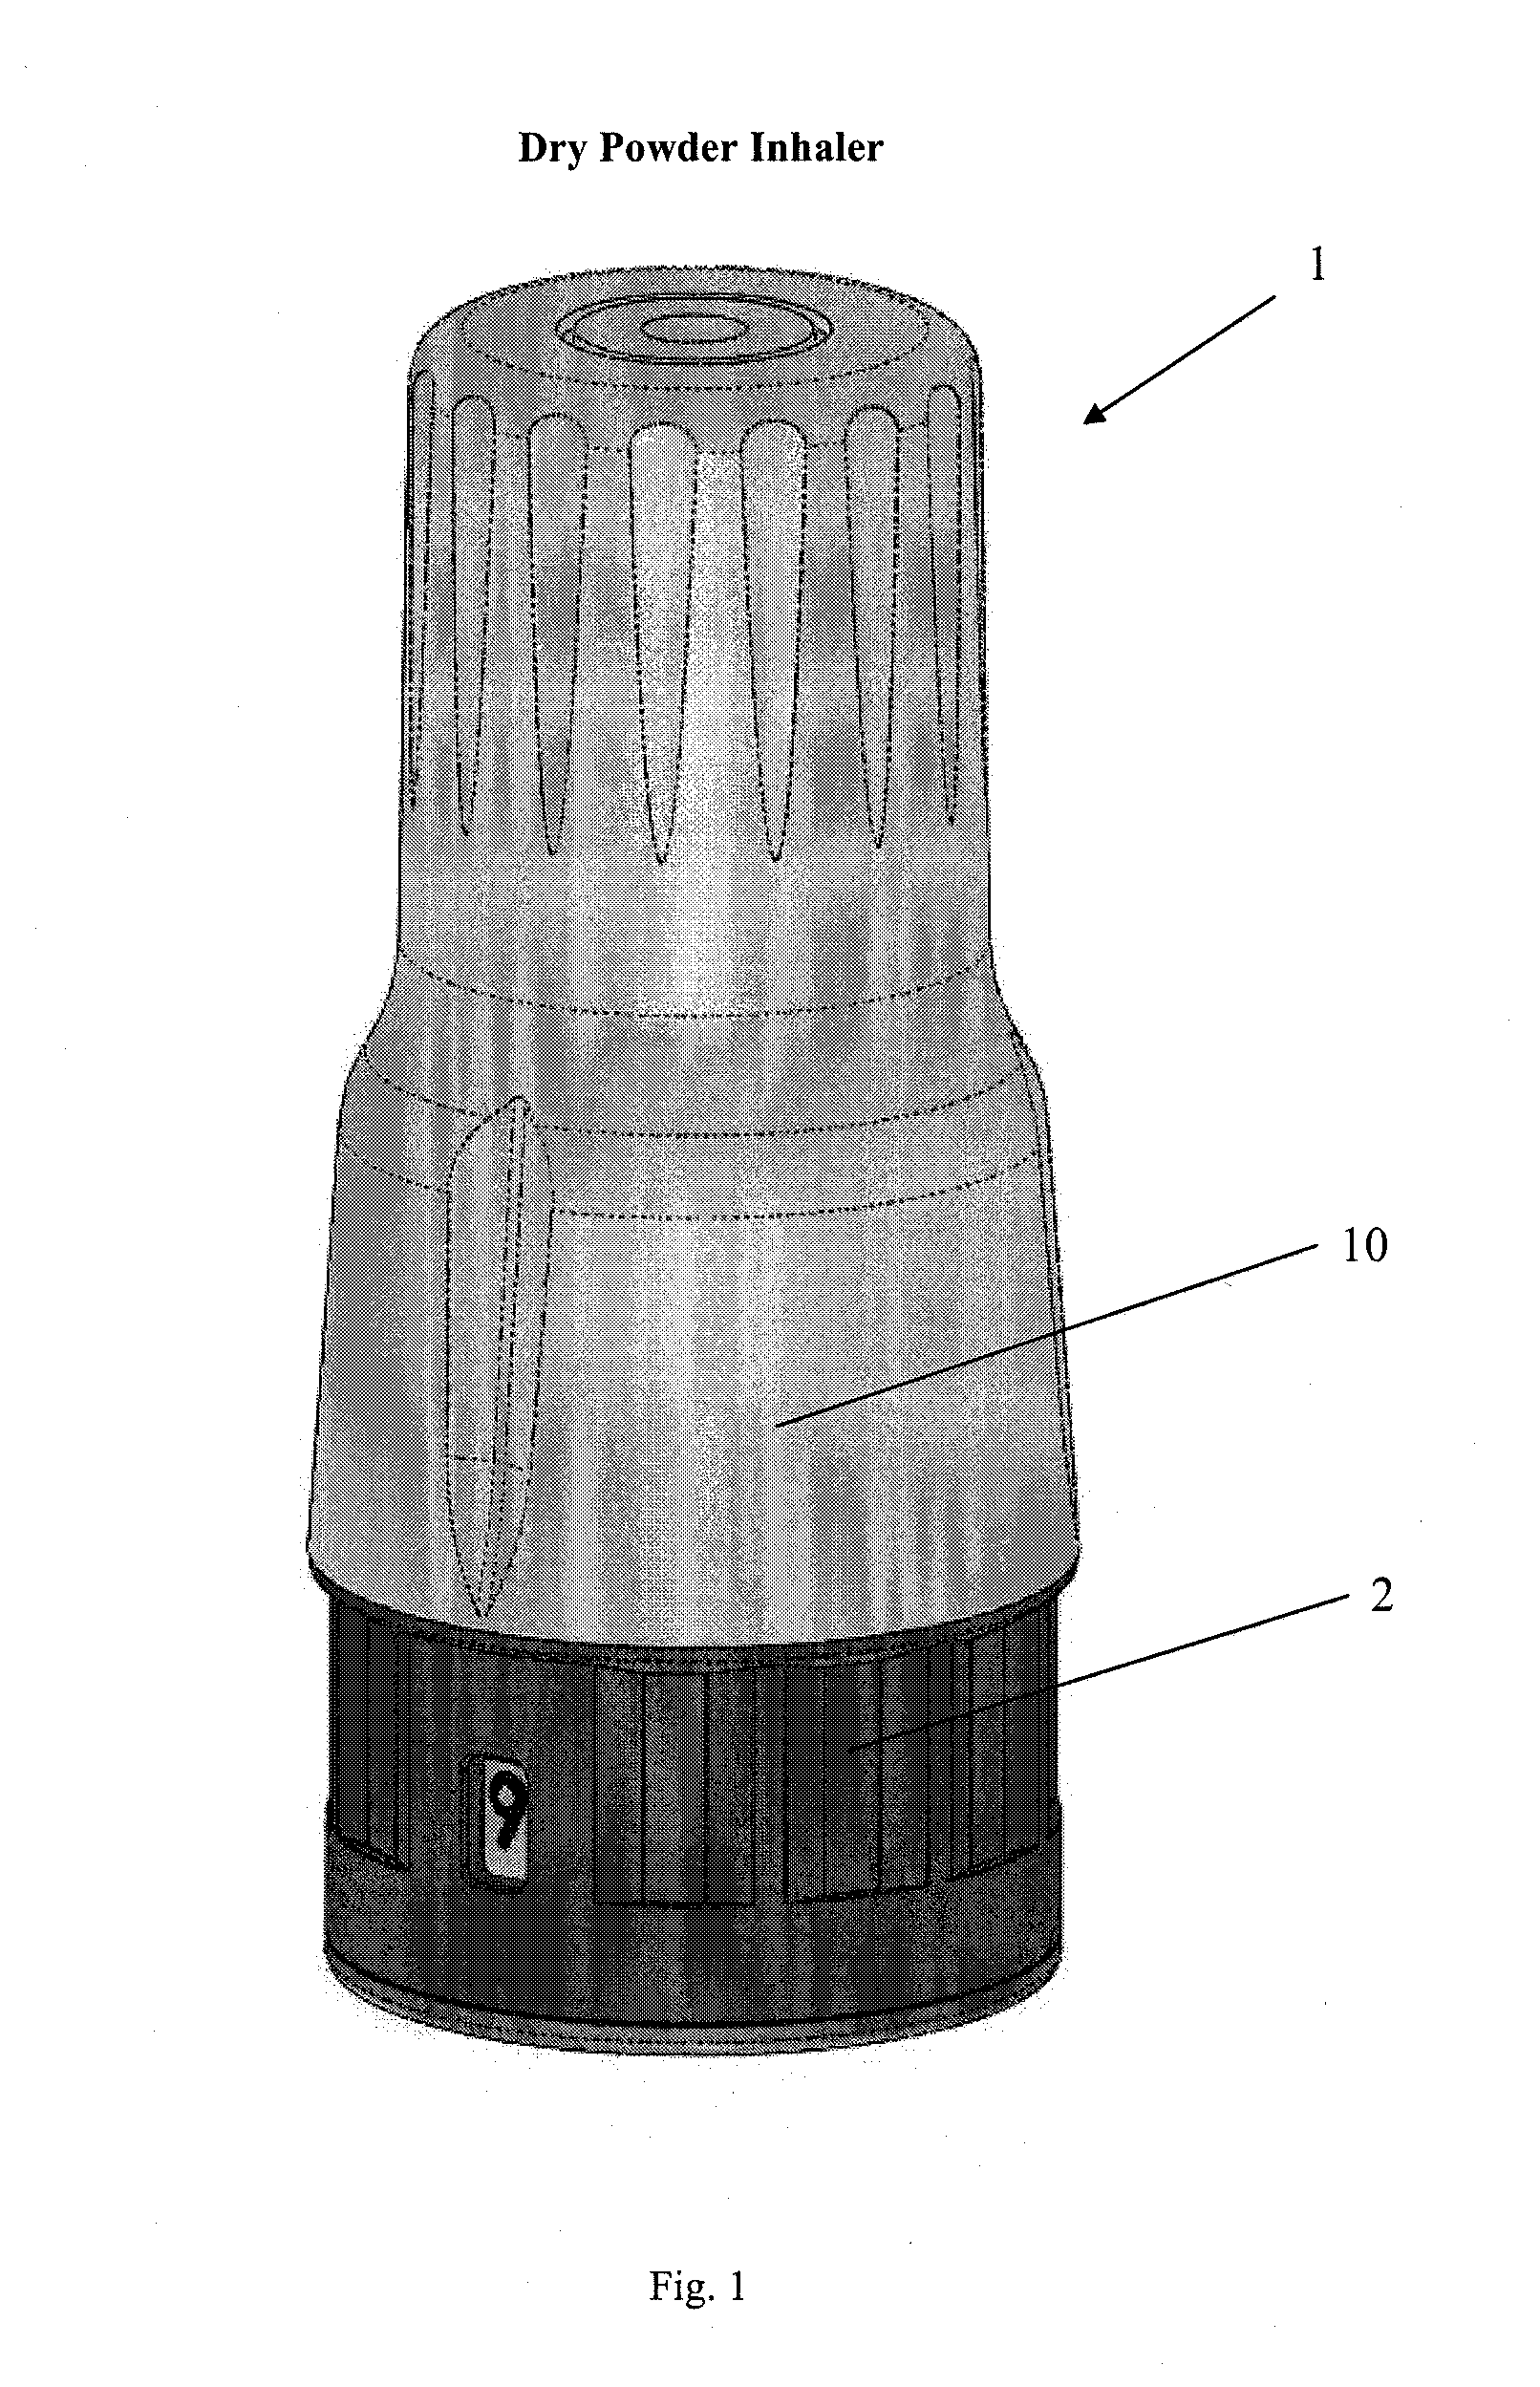 Dry powder inhaler with large capacity reservoir